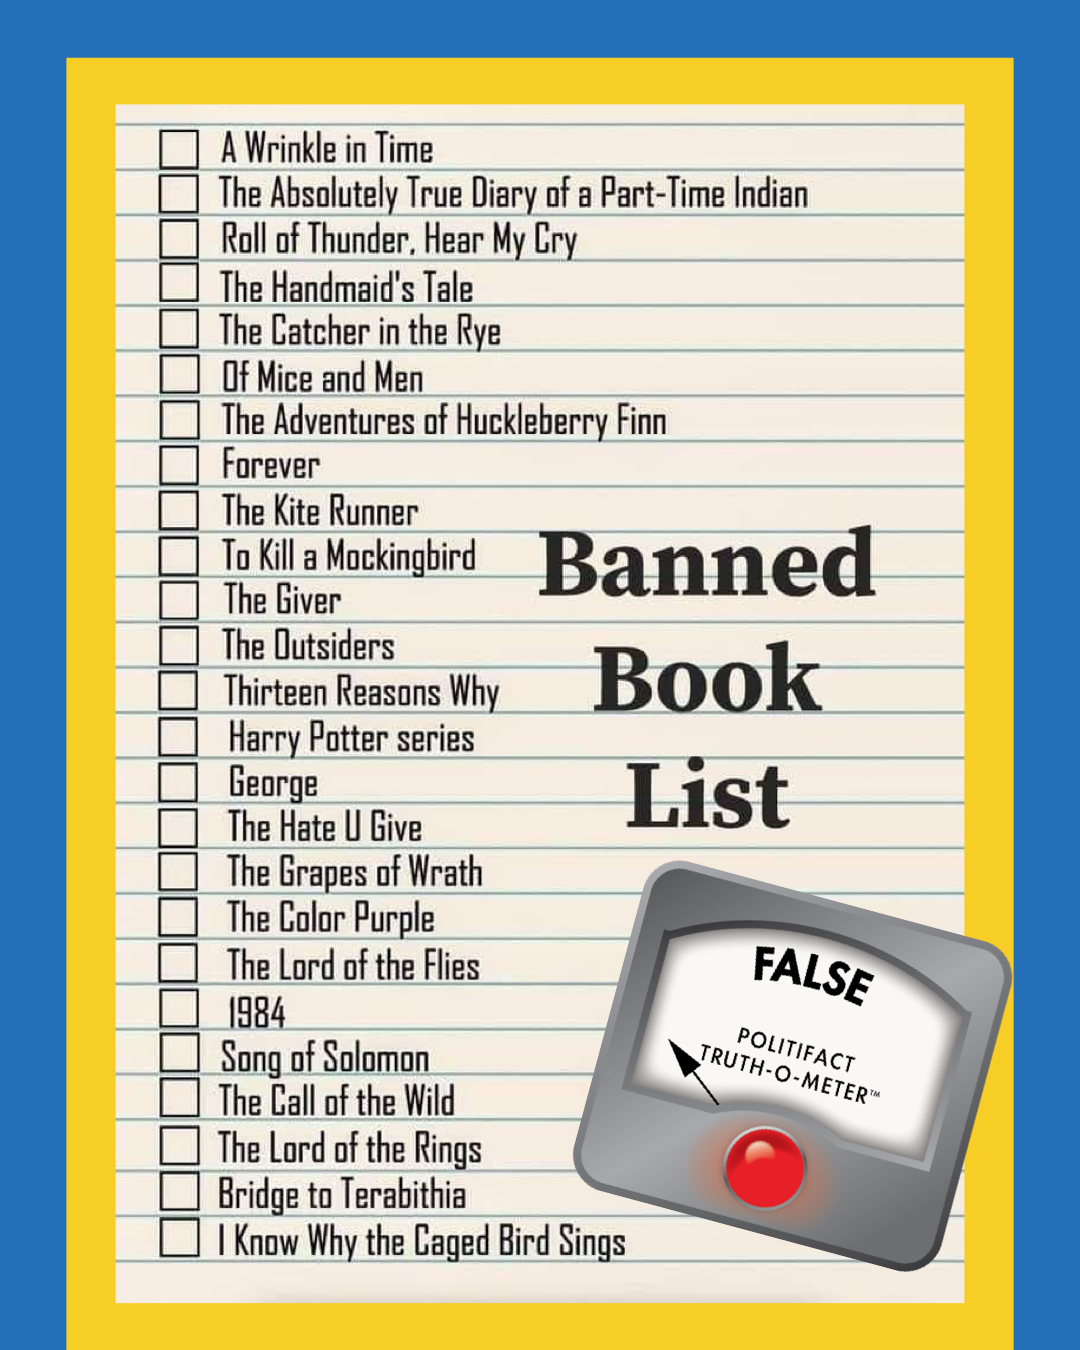 banned books list york pa Associated Himself EZine Photographs